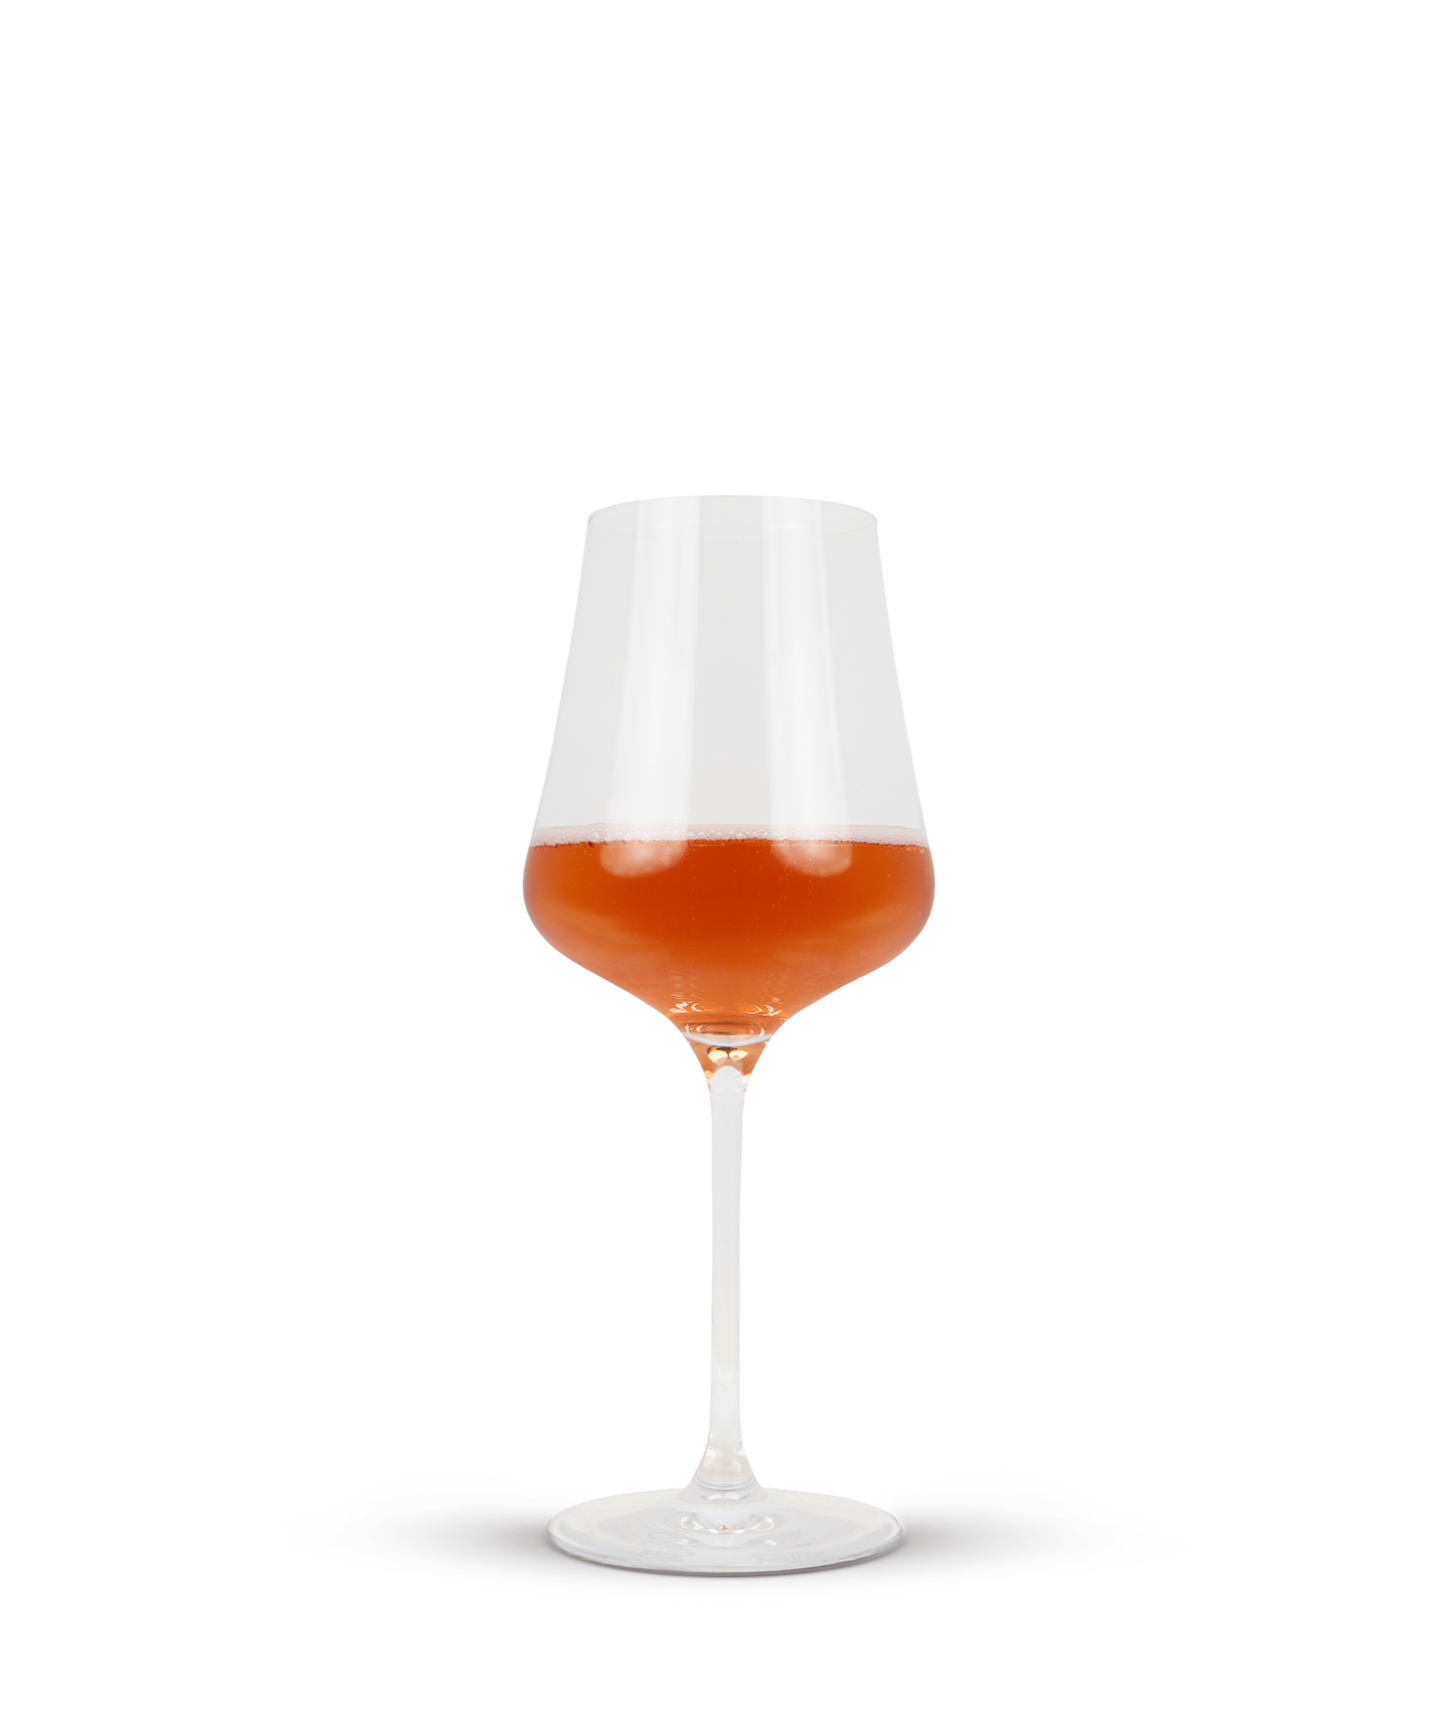 2021 The Marigny Piquette, "Wine Like Beverage"